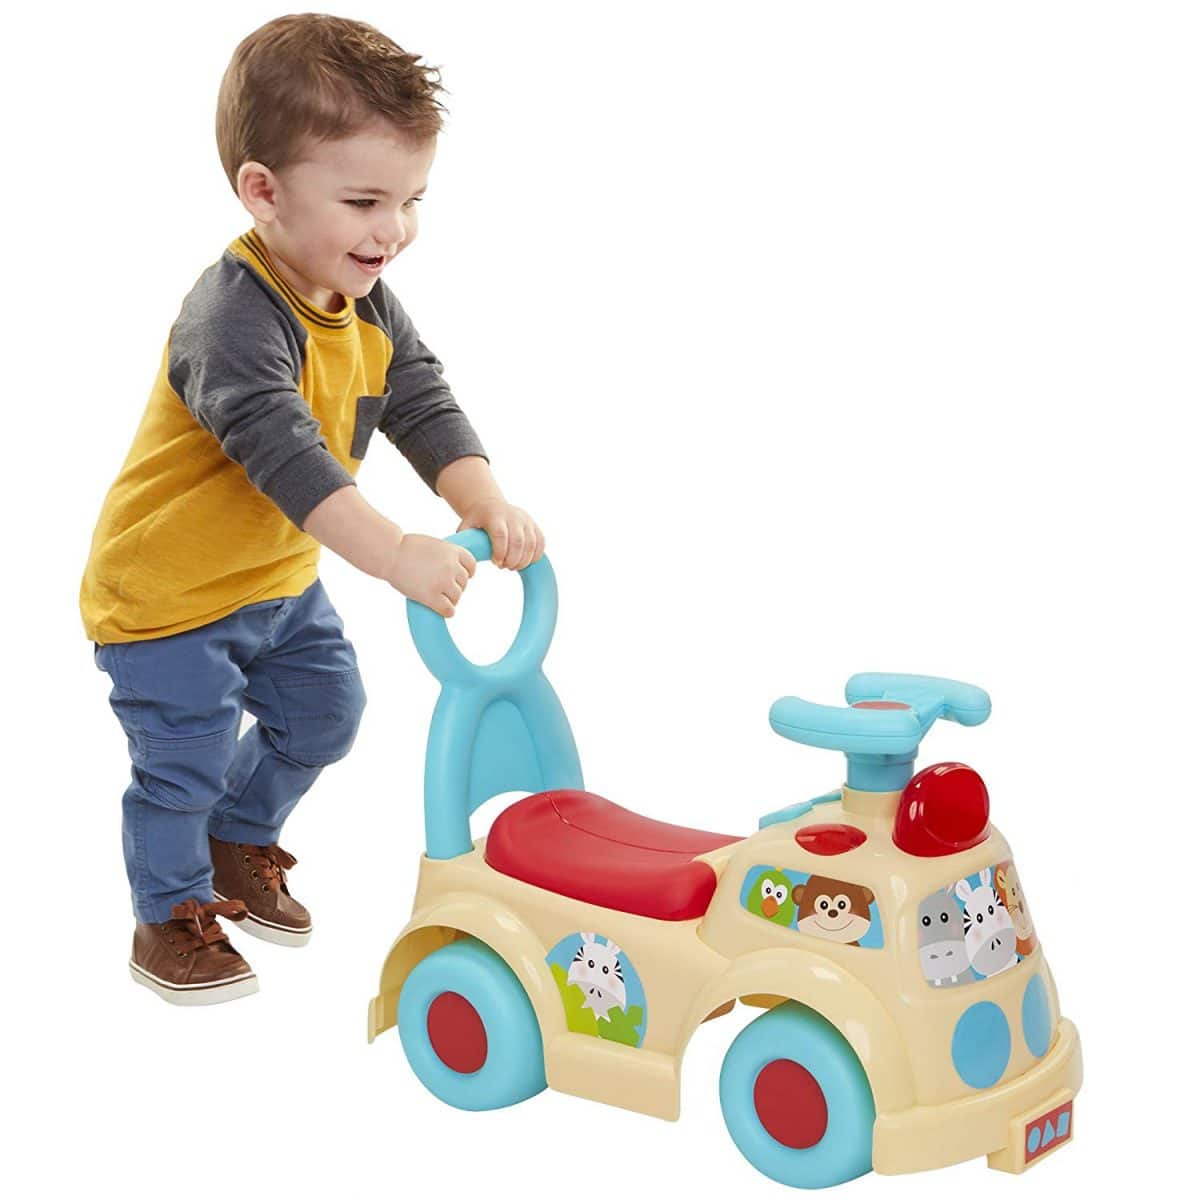 push toys to help baby walk